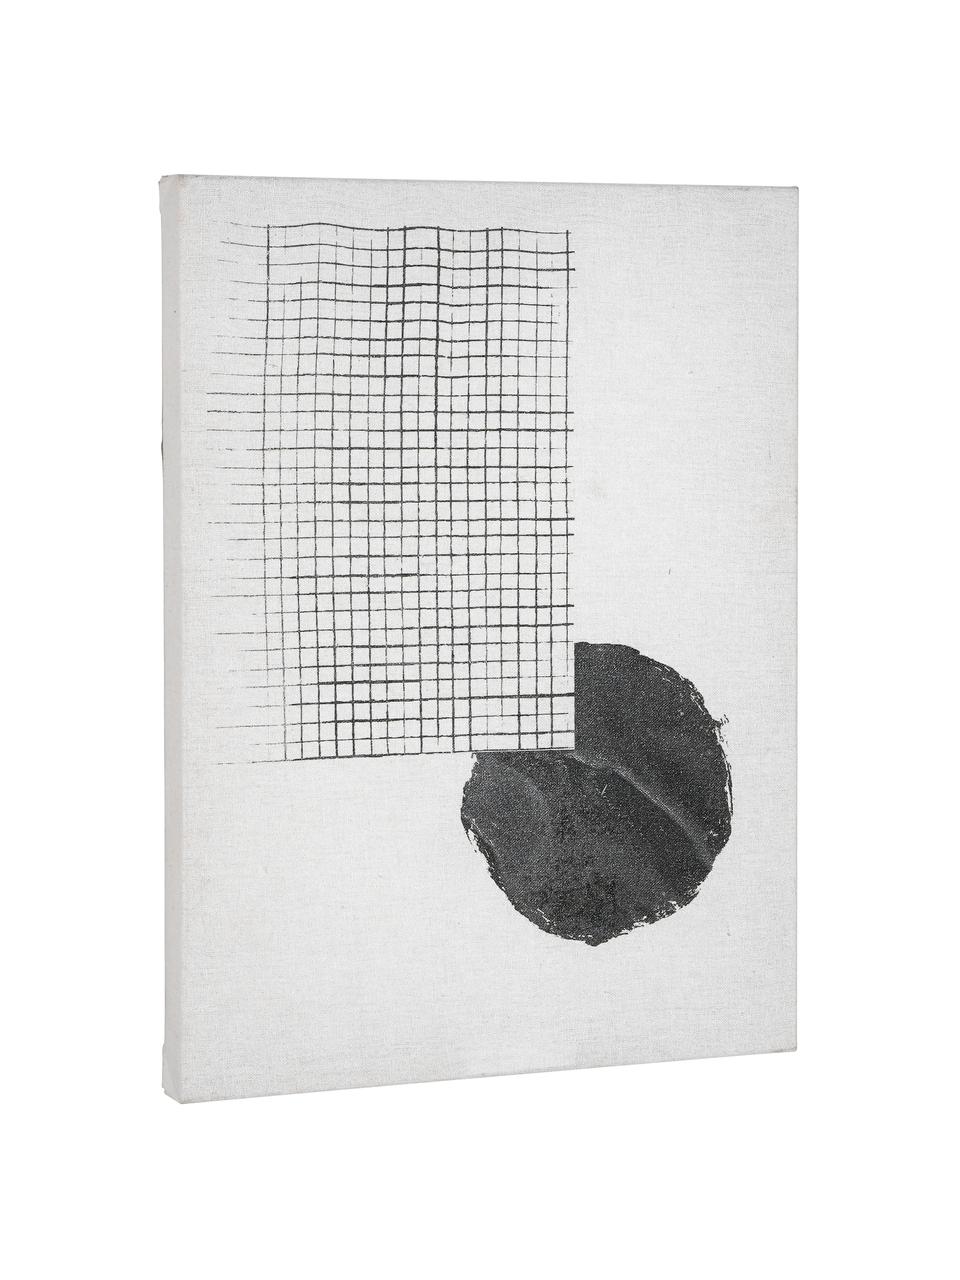 Leinwanddruck Prisma, Bild: Leinwand, Weiss, Schwarz, 30 x 40 cm